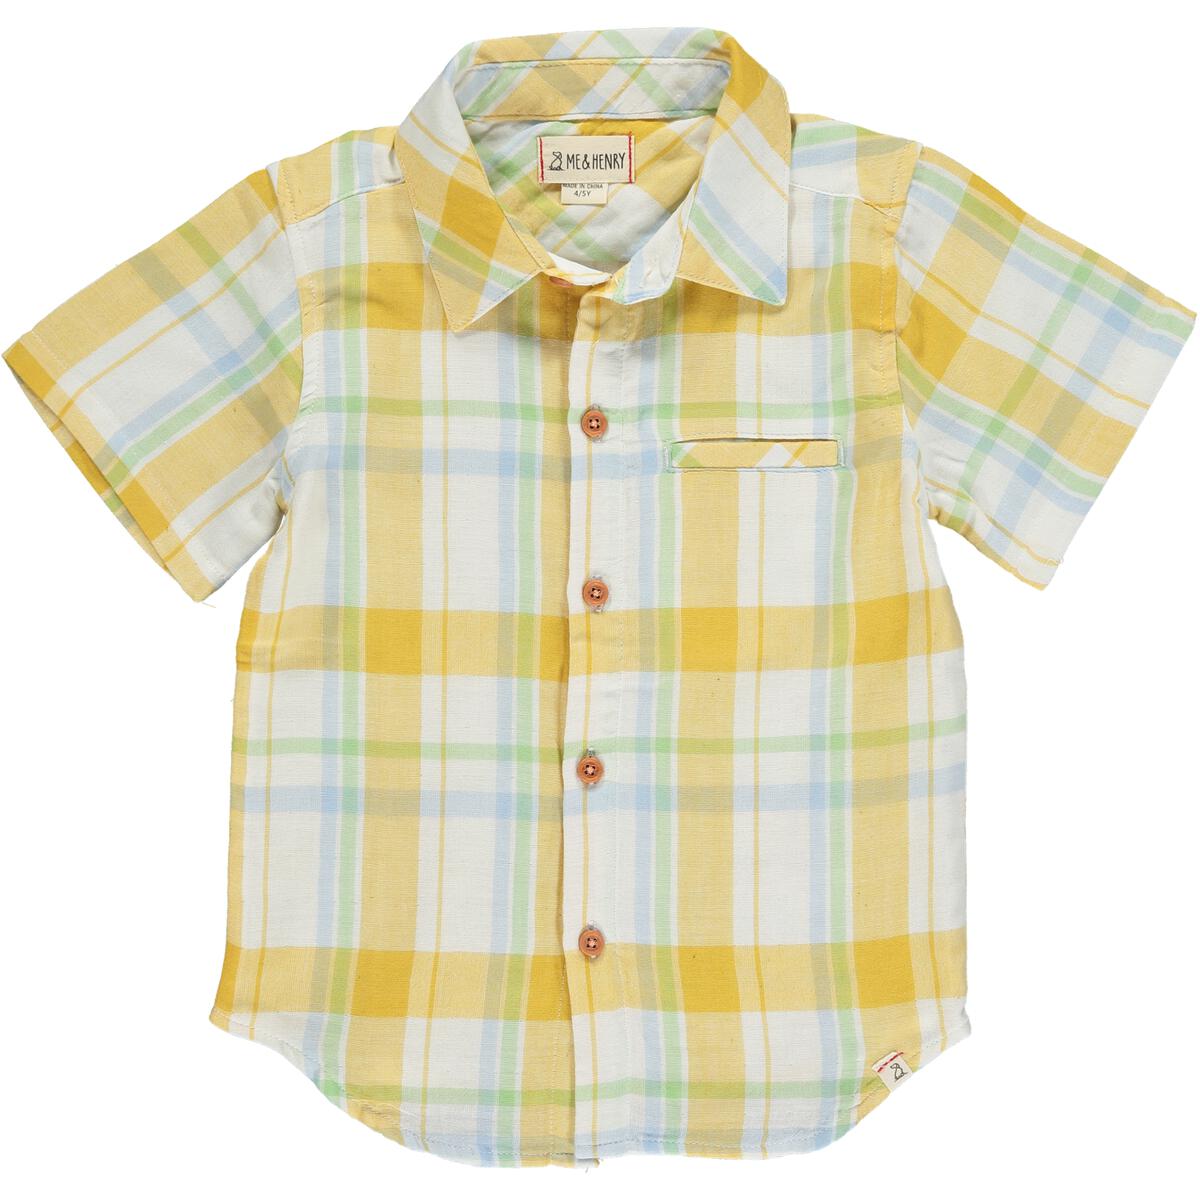 Newport Shirt - Yellow Plaid